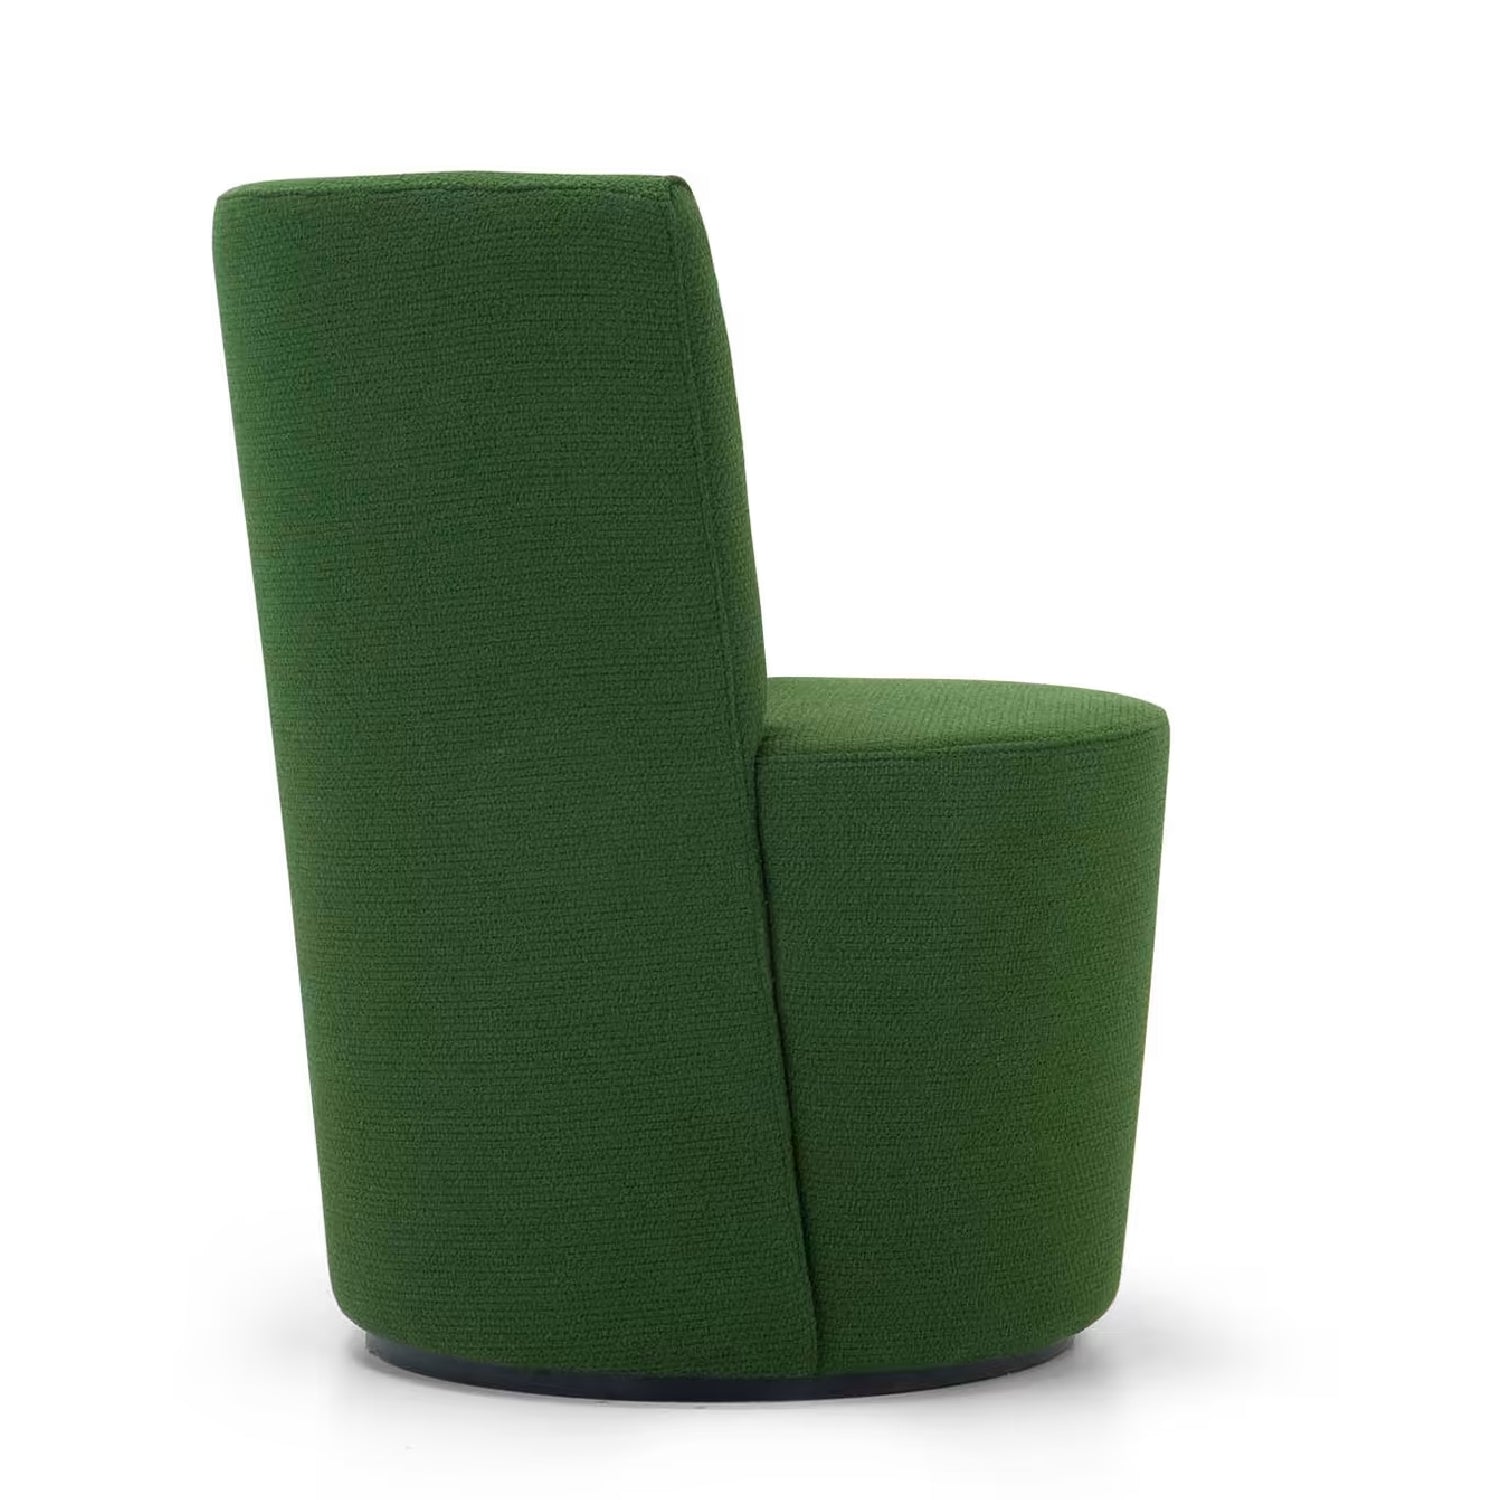 Ronda Green Armchair by Domingo Salotti